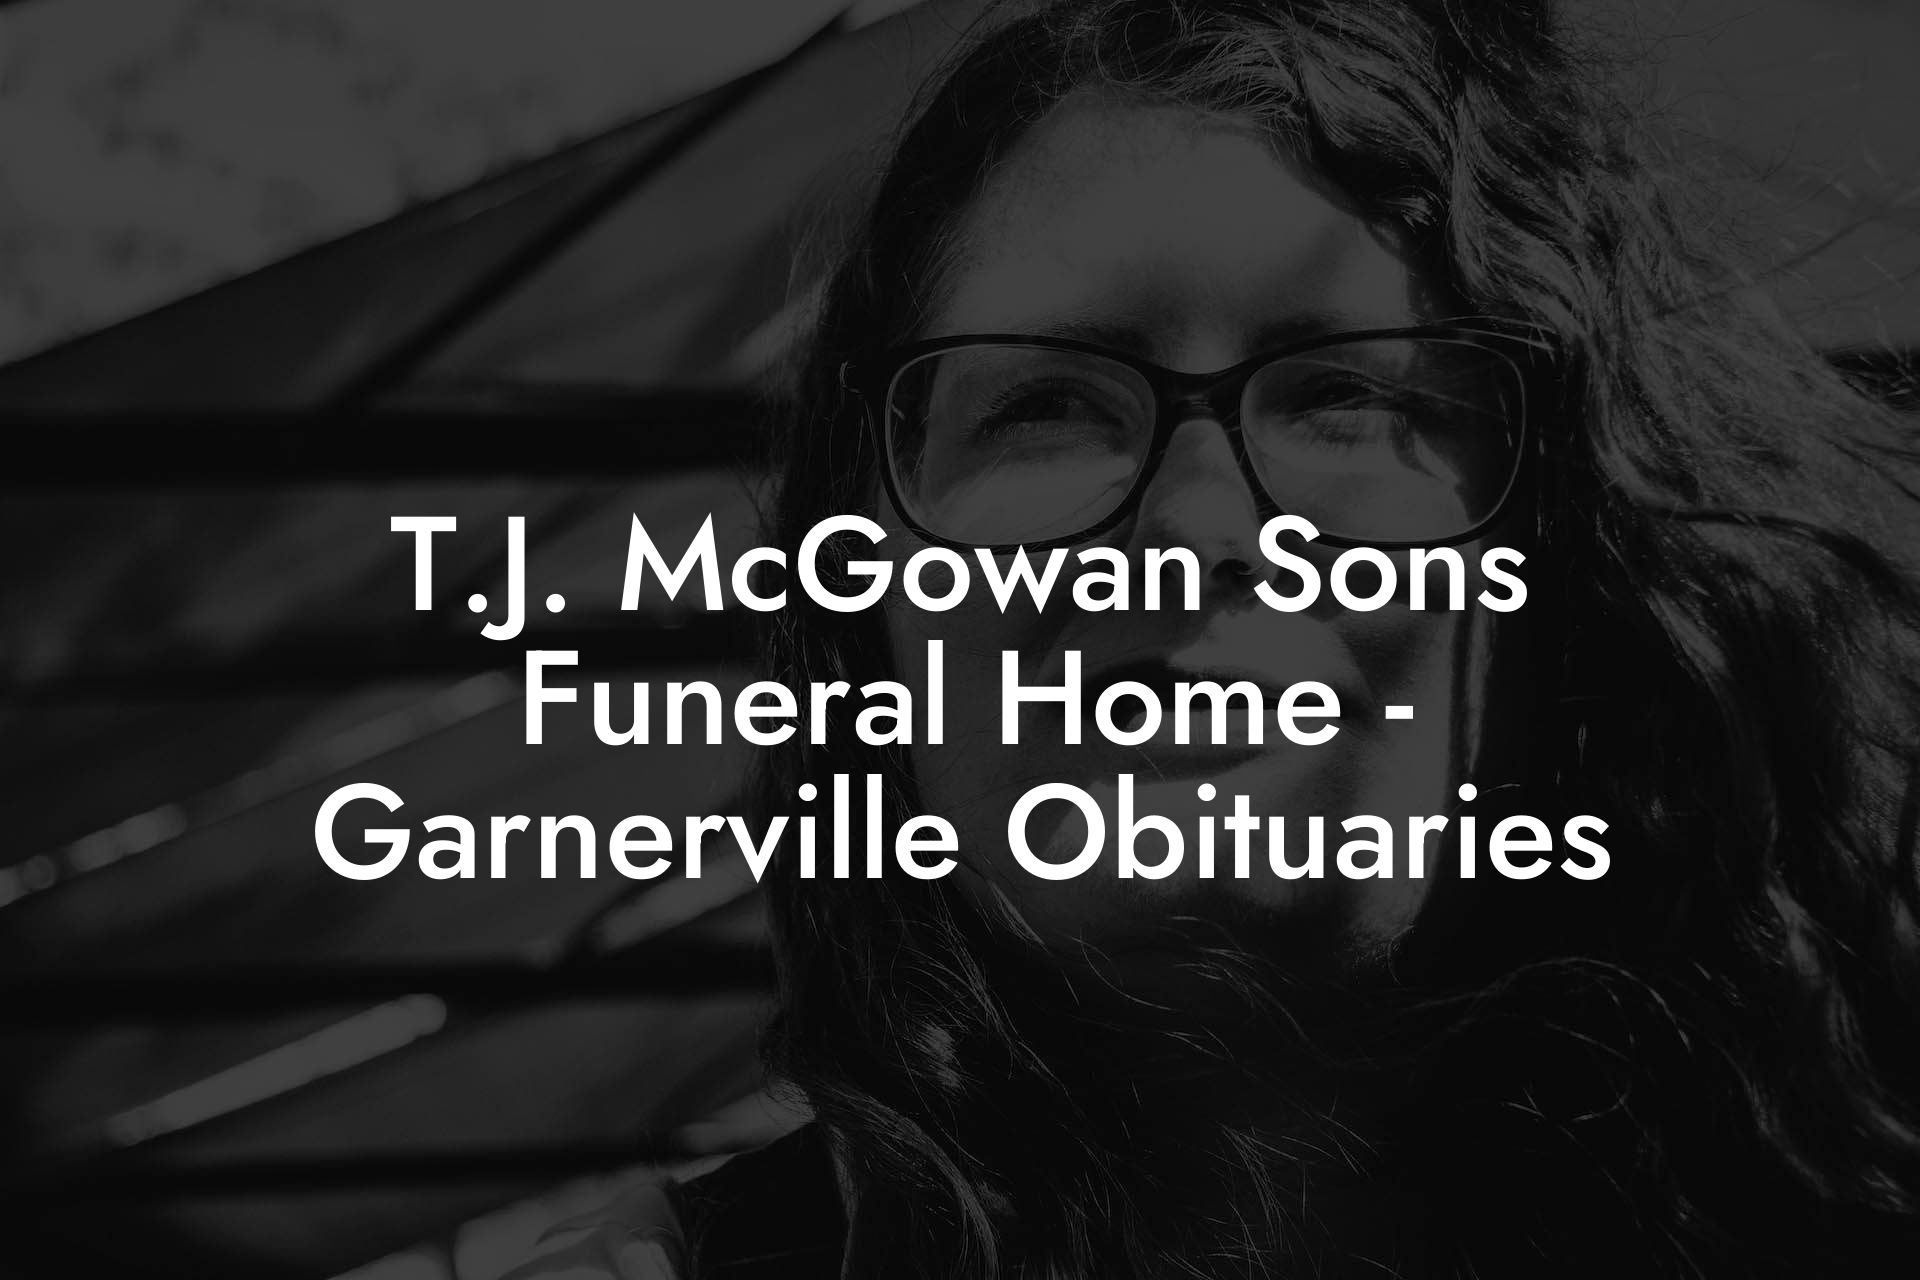 T.J. McGowan Sons Funeral Home - Garnerville Obituaries